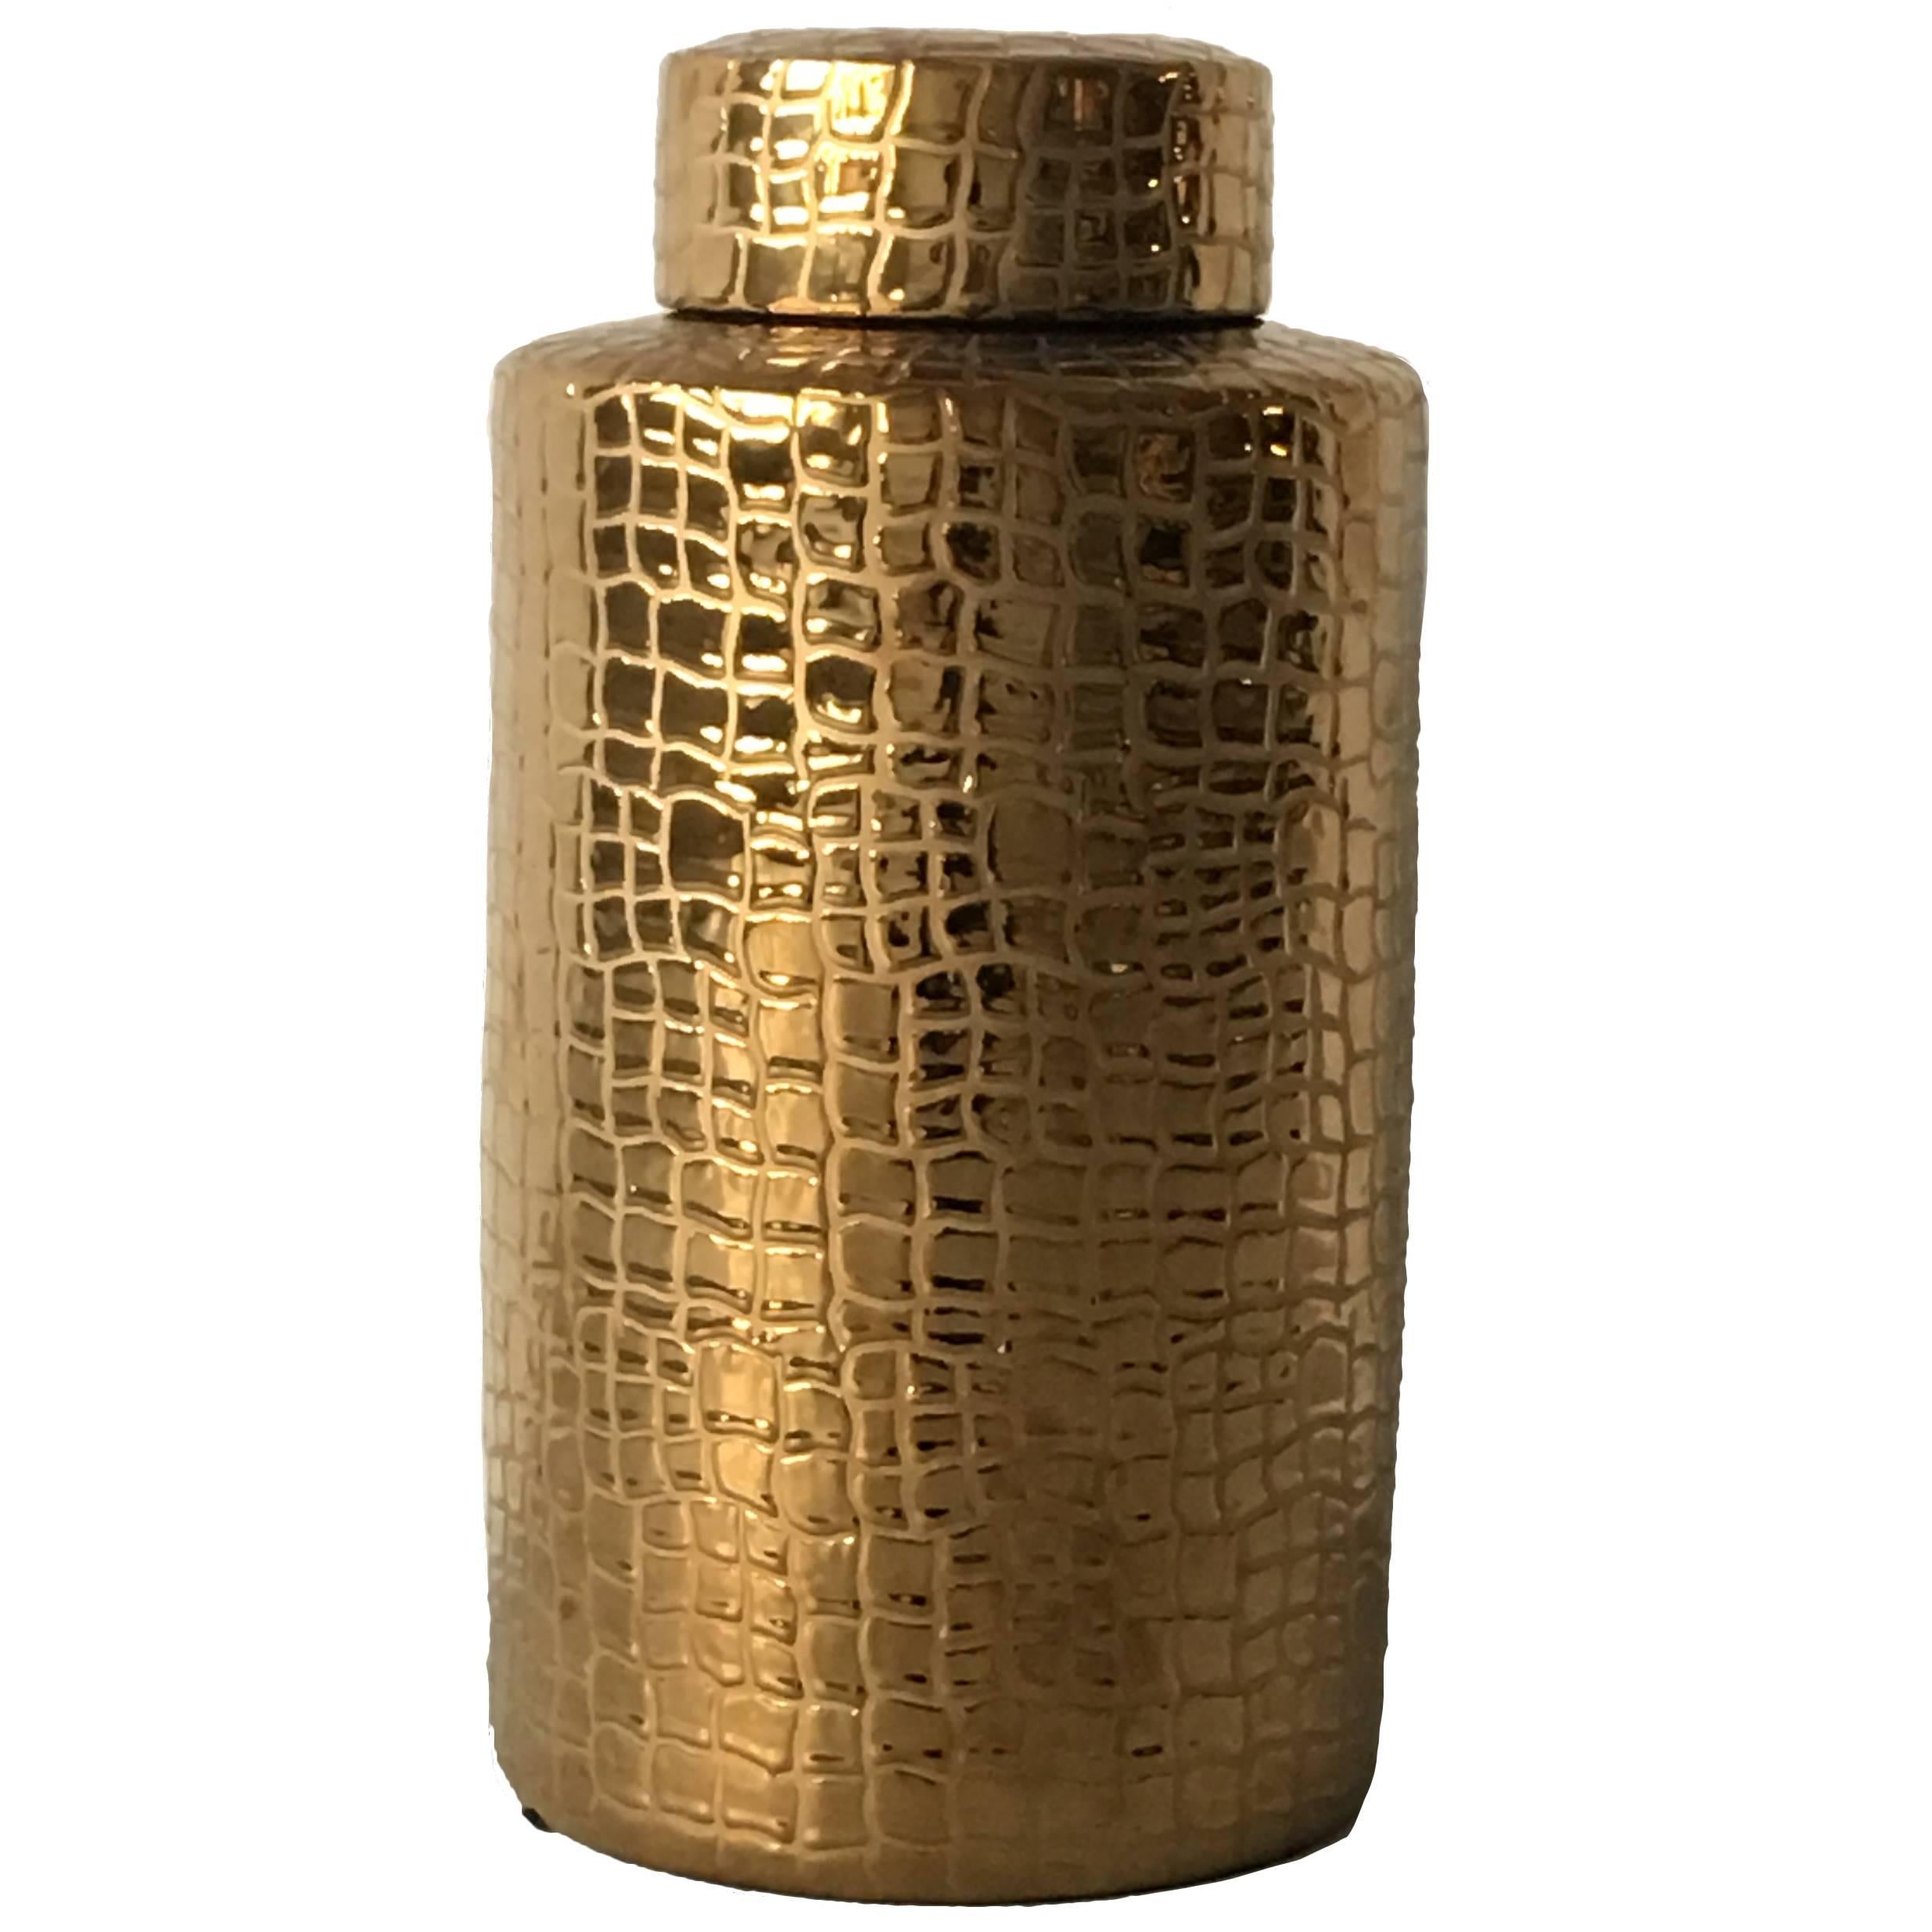 Gold Ginger Jar with Snake Skin Motif